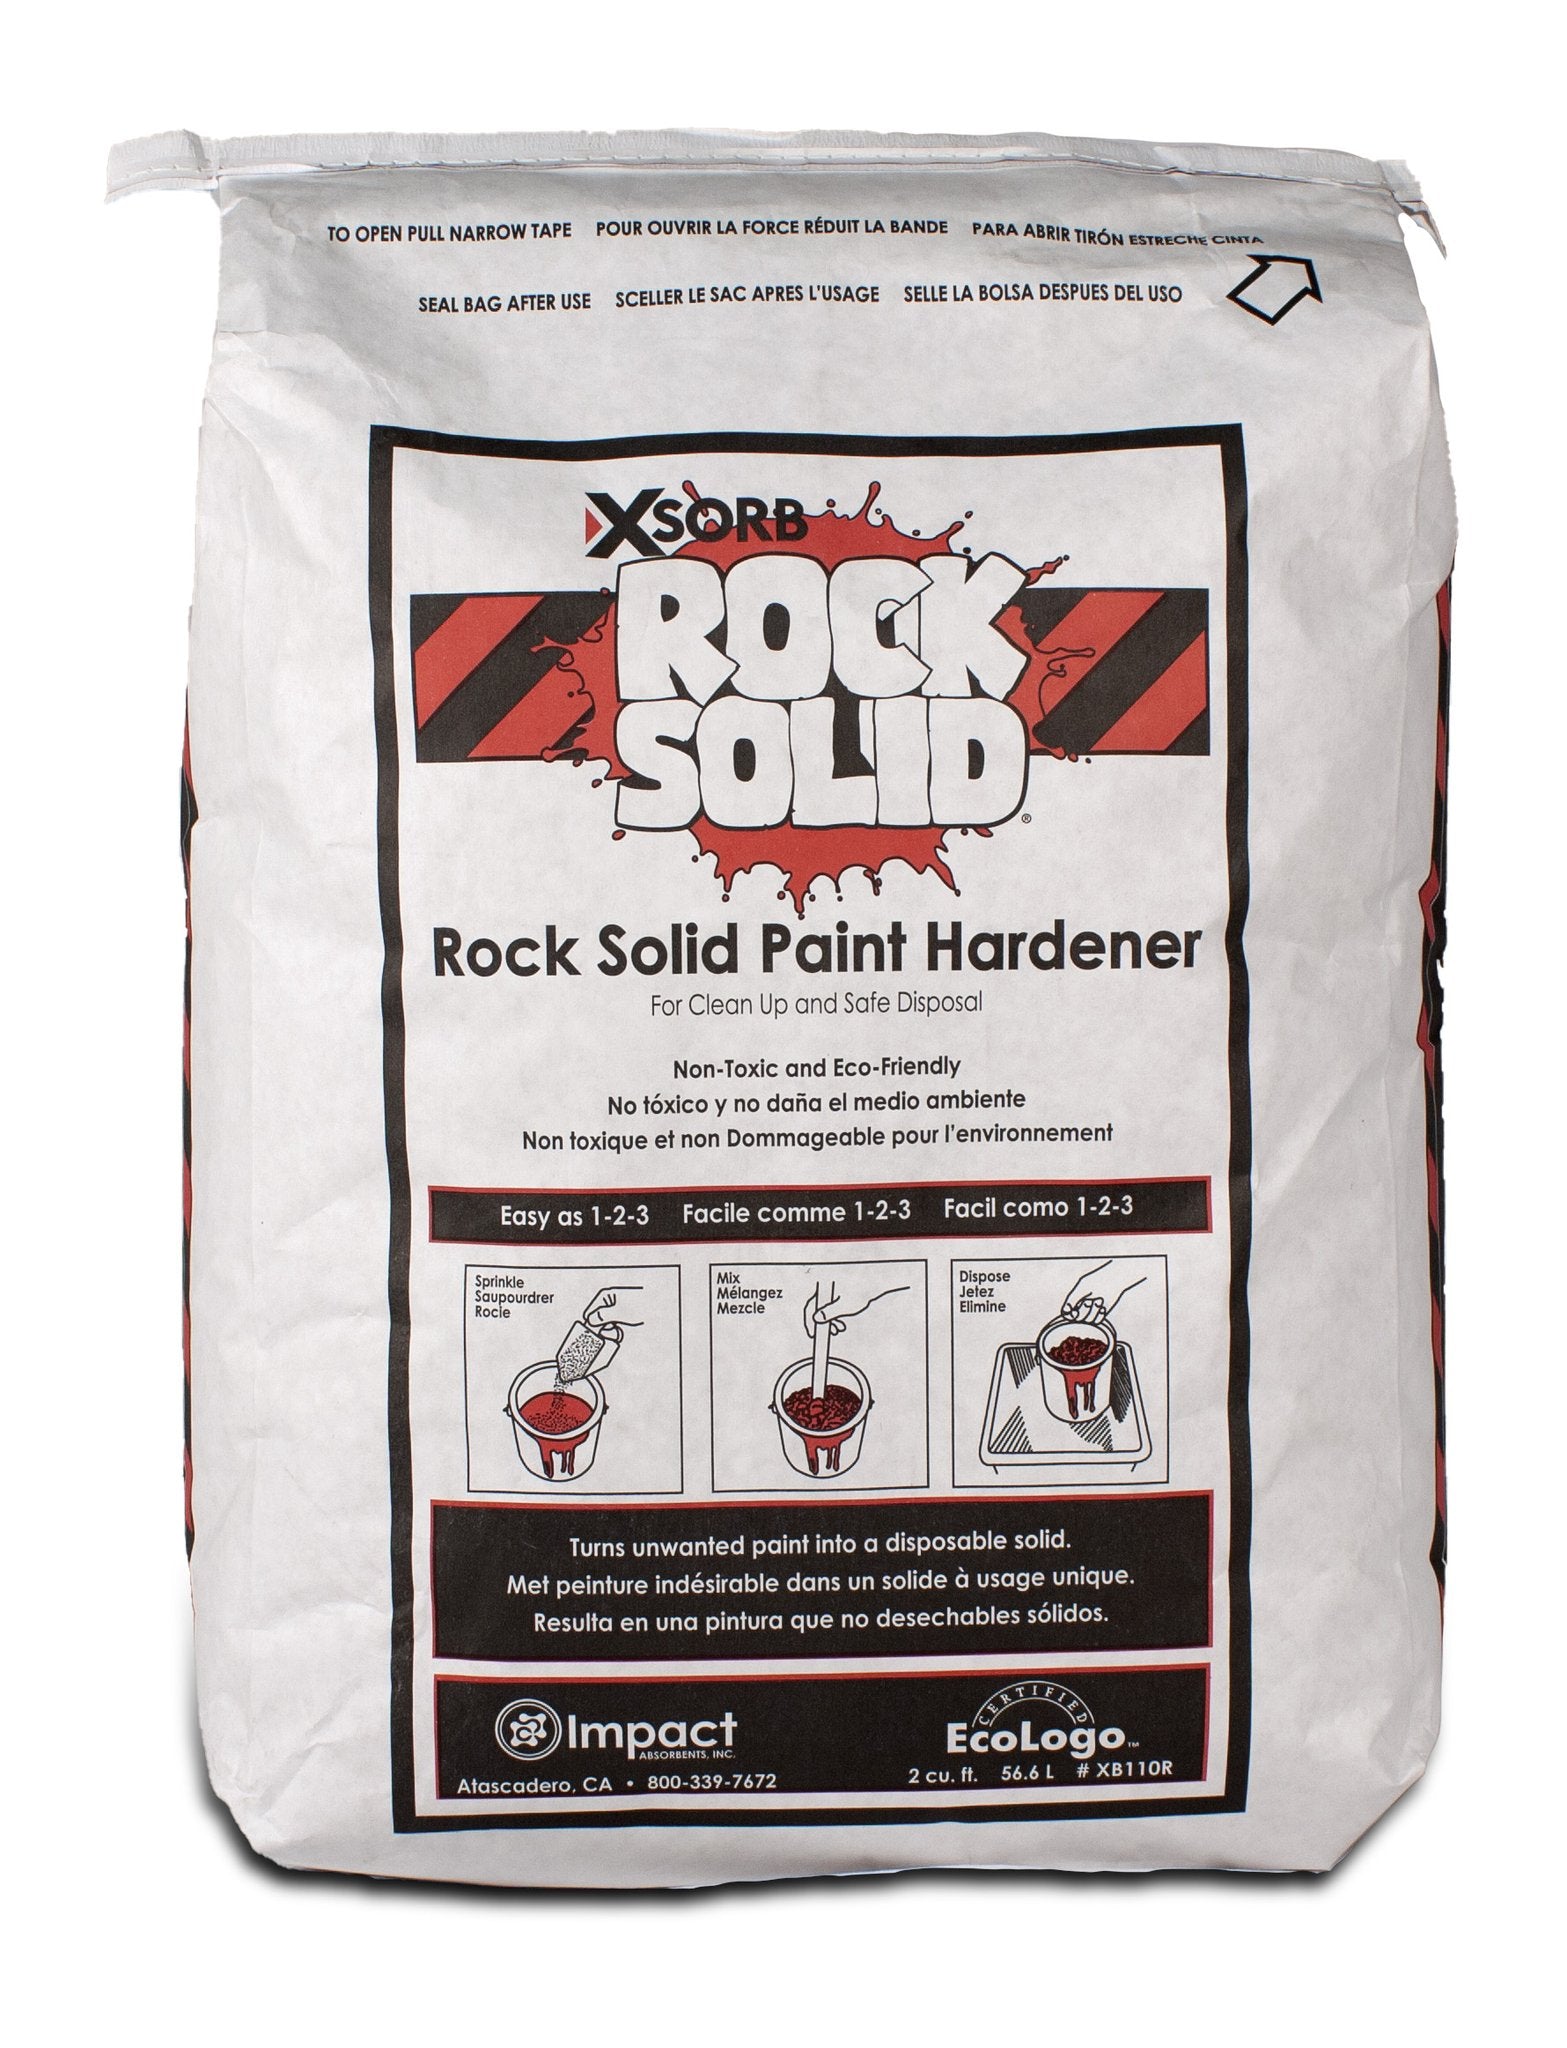 XSORB Rock Solid Paint Hardener Bag 1.75 cu. ft. - 1 BAG-eSafety Supplies, Inc